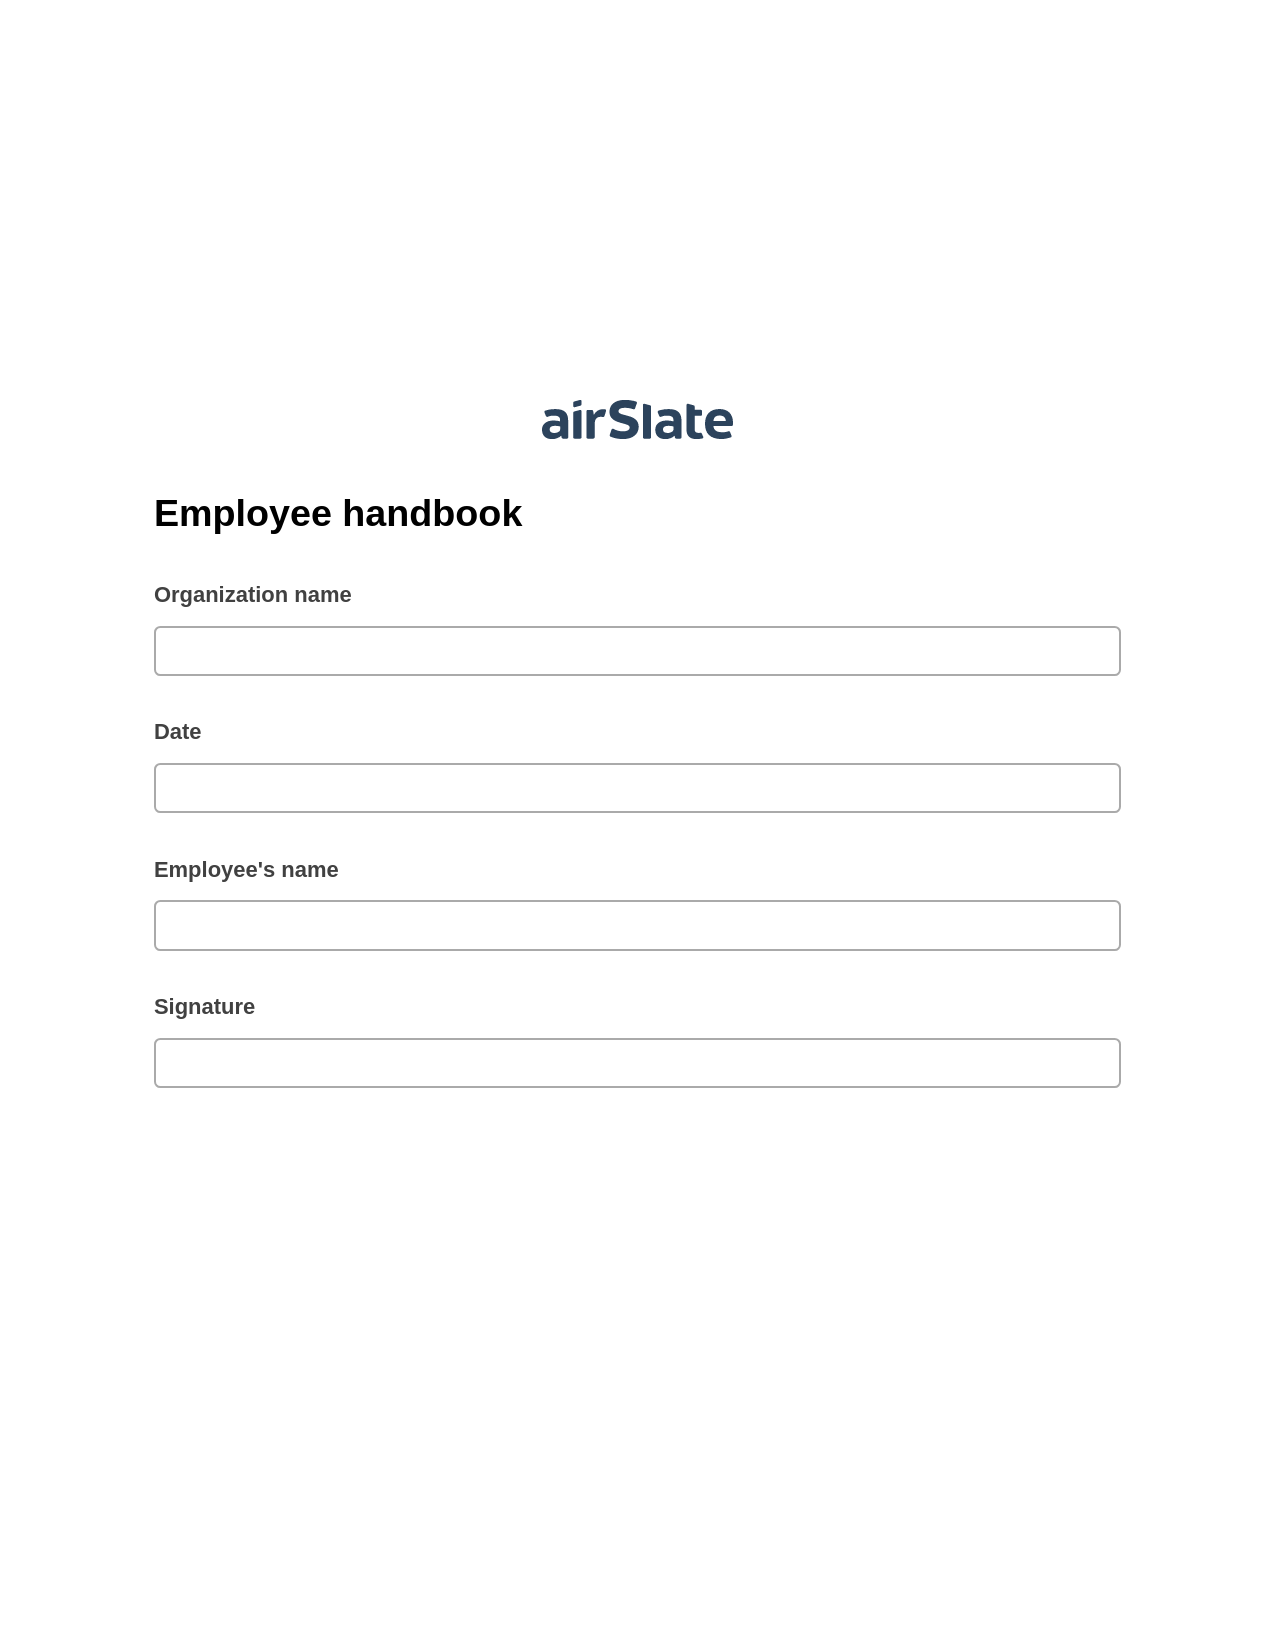 Employee handbook Pre-fill from CSV File Bot, Add Tags to Slate Bot, Slack Two-Way Binding Bot